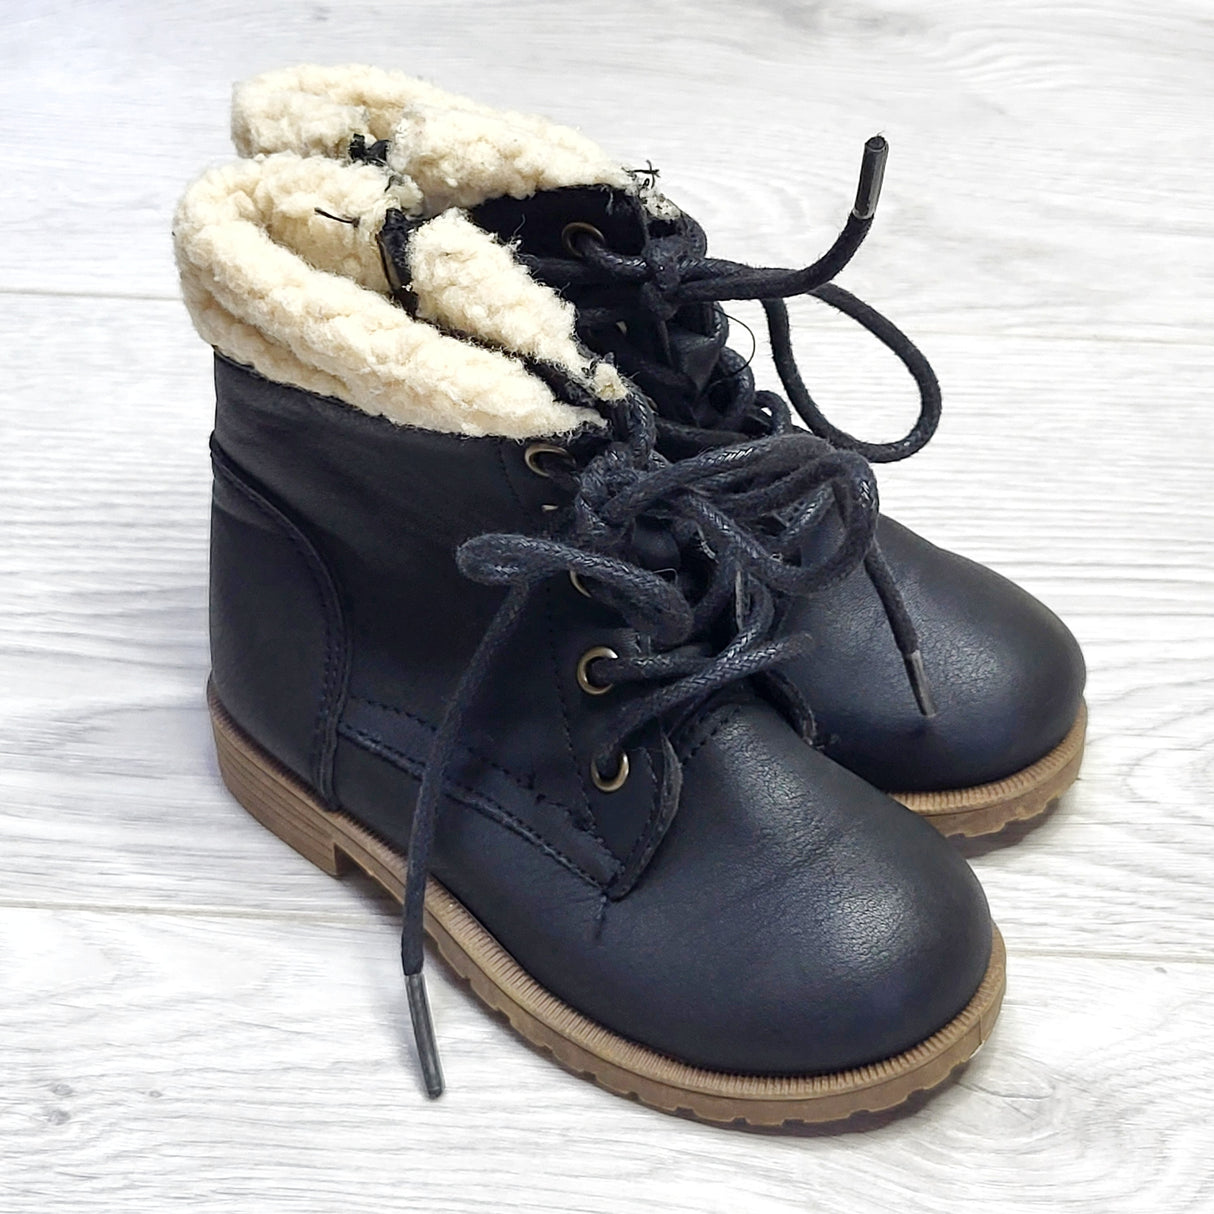 KJHN2 - Bebe Girls black lace up boots with side zipper. Size 7